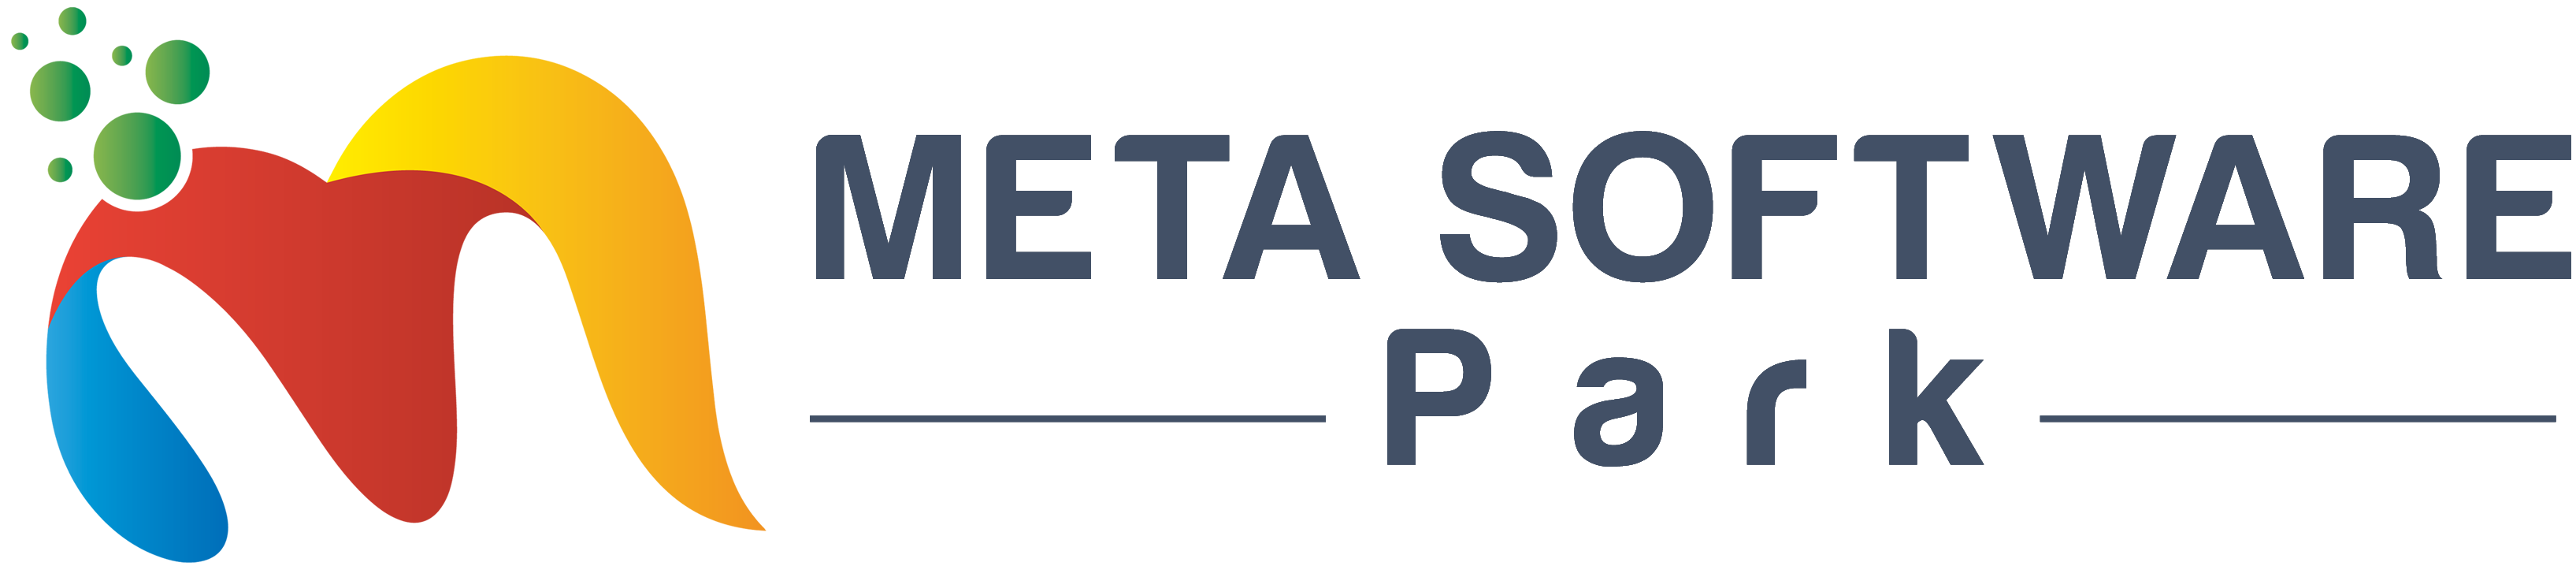 Meta Software Park